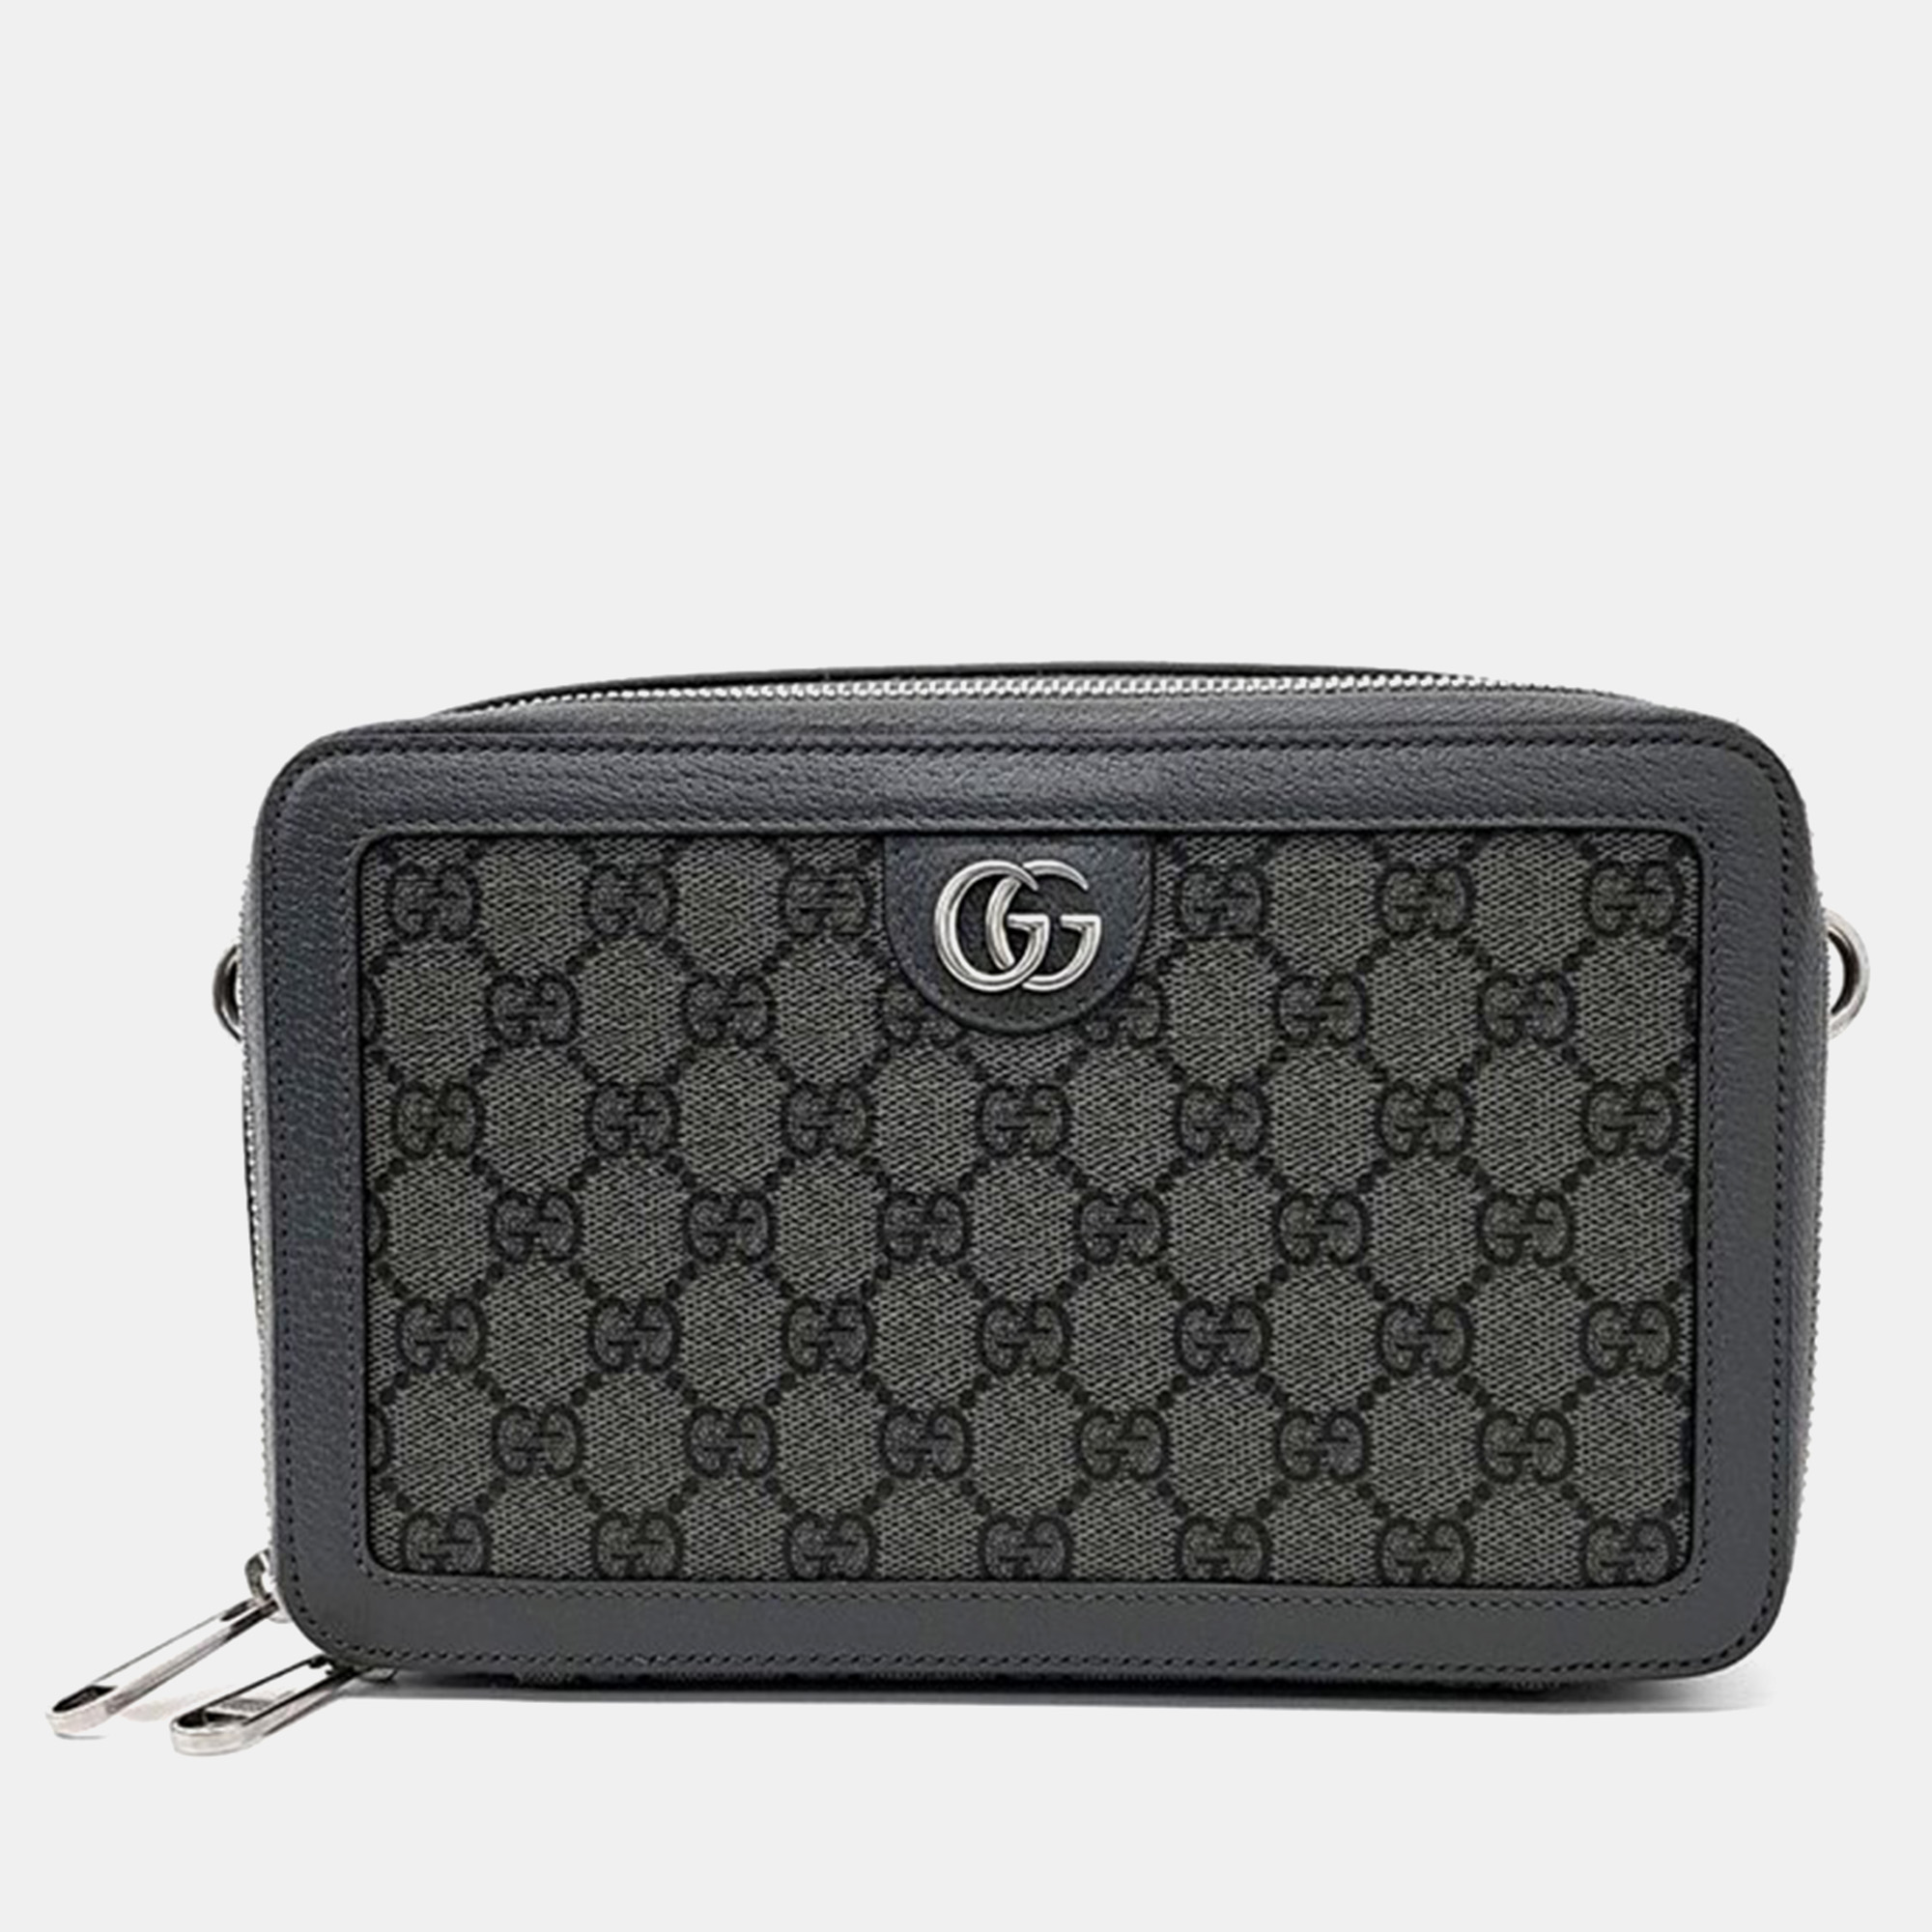 Gucci ophidia gg mini bag